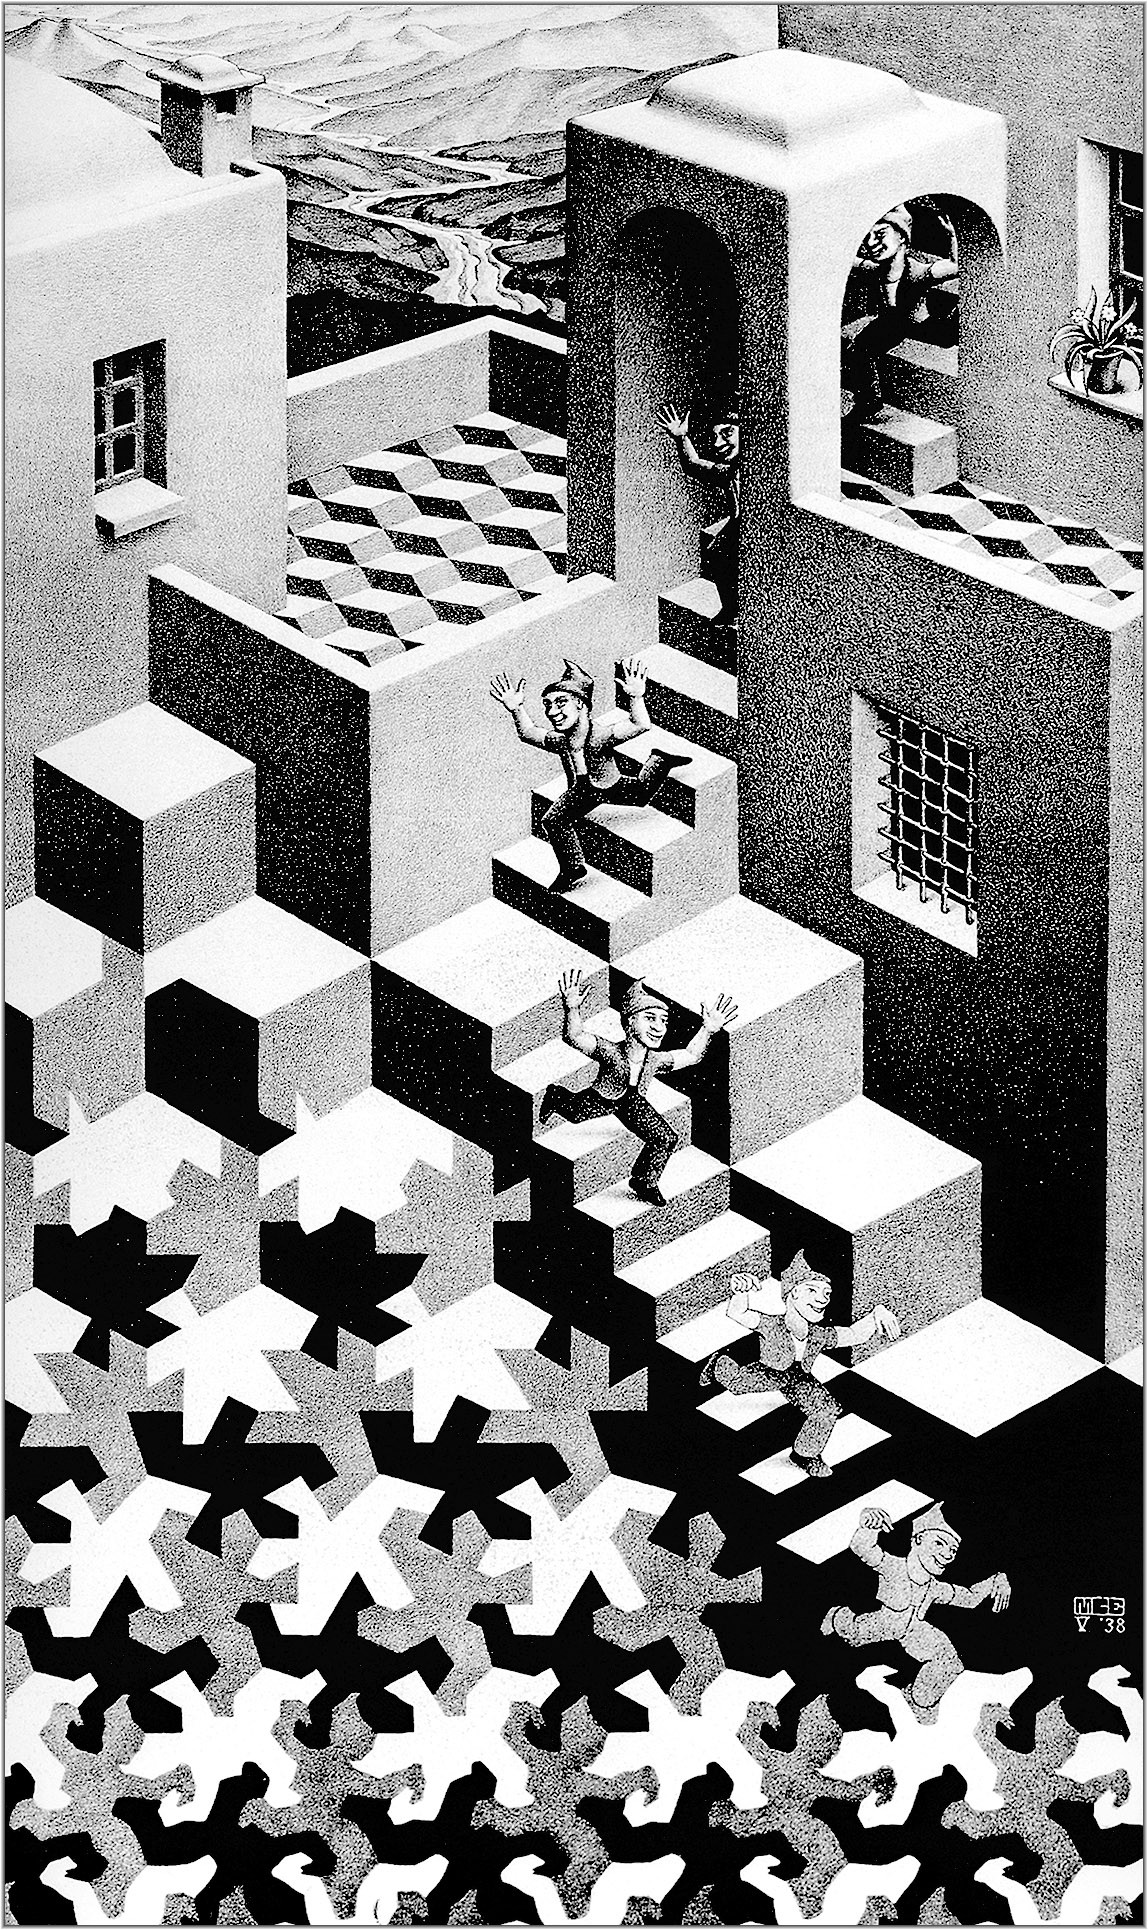 Artwork Optical Illusion M C Escher Monochrome Portrait Display Lithograph Stairs Building Cube 1148x1930